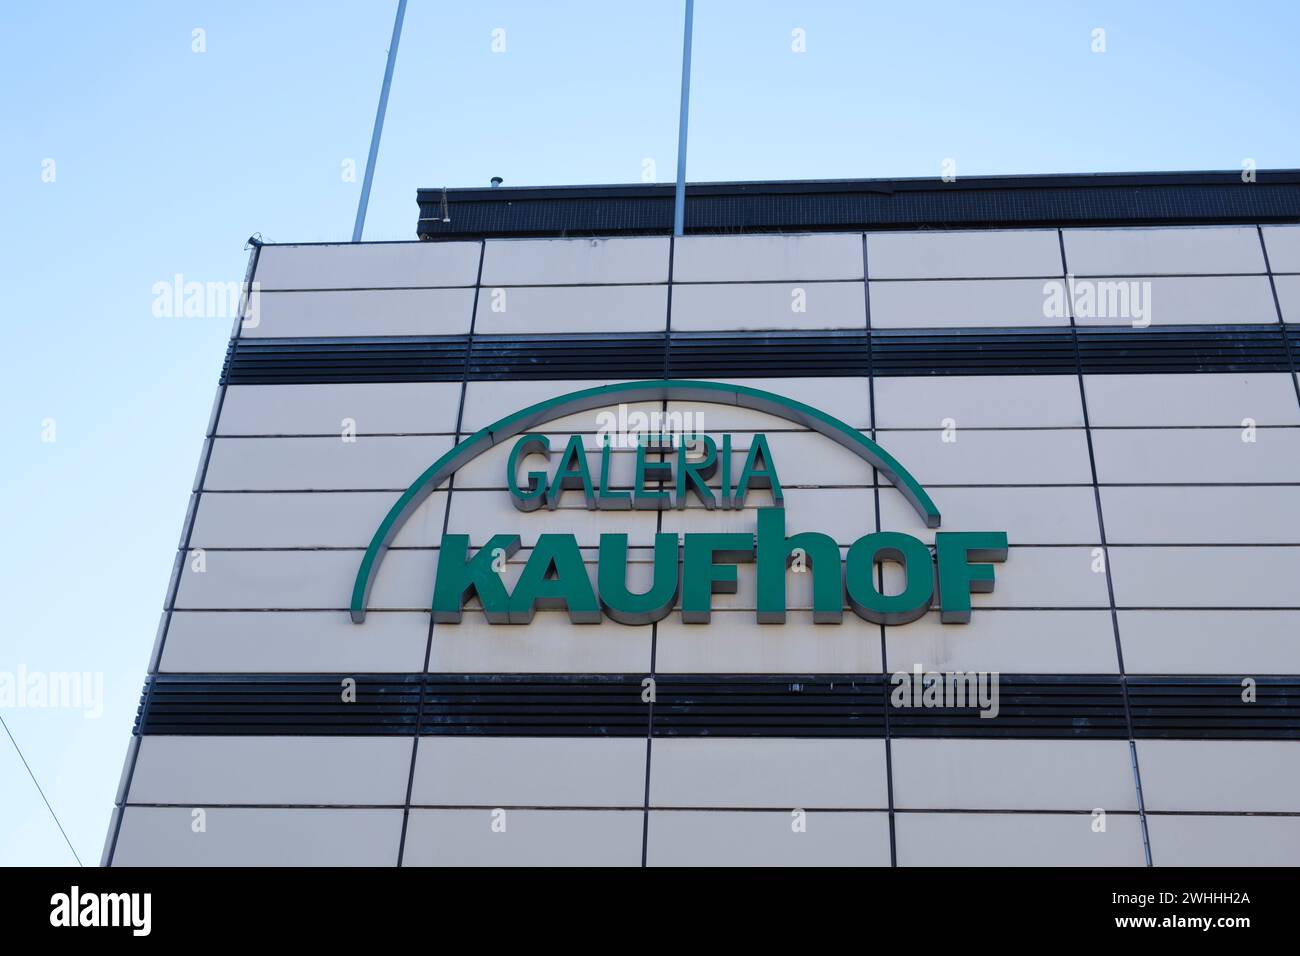 Façade avec chant et logo de Galeria Kaufhof Banque D'Images